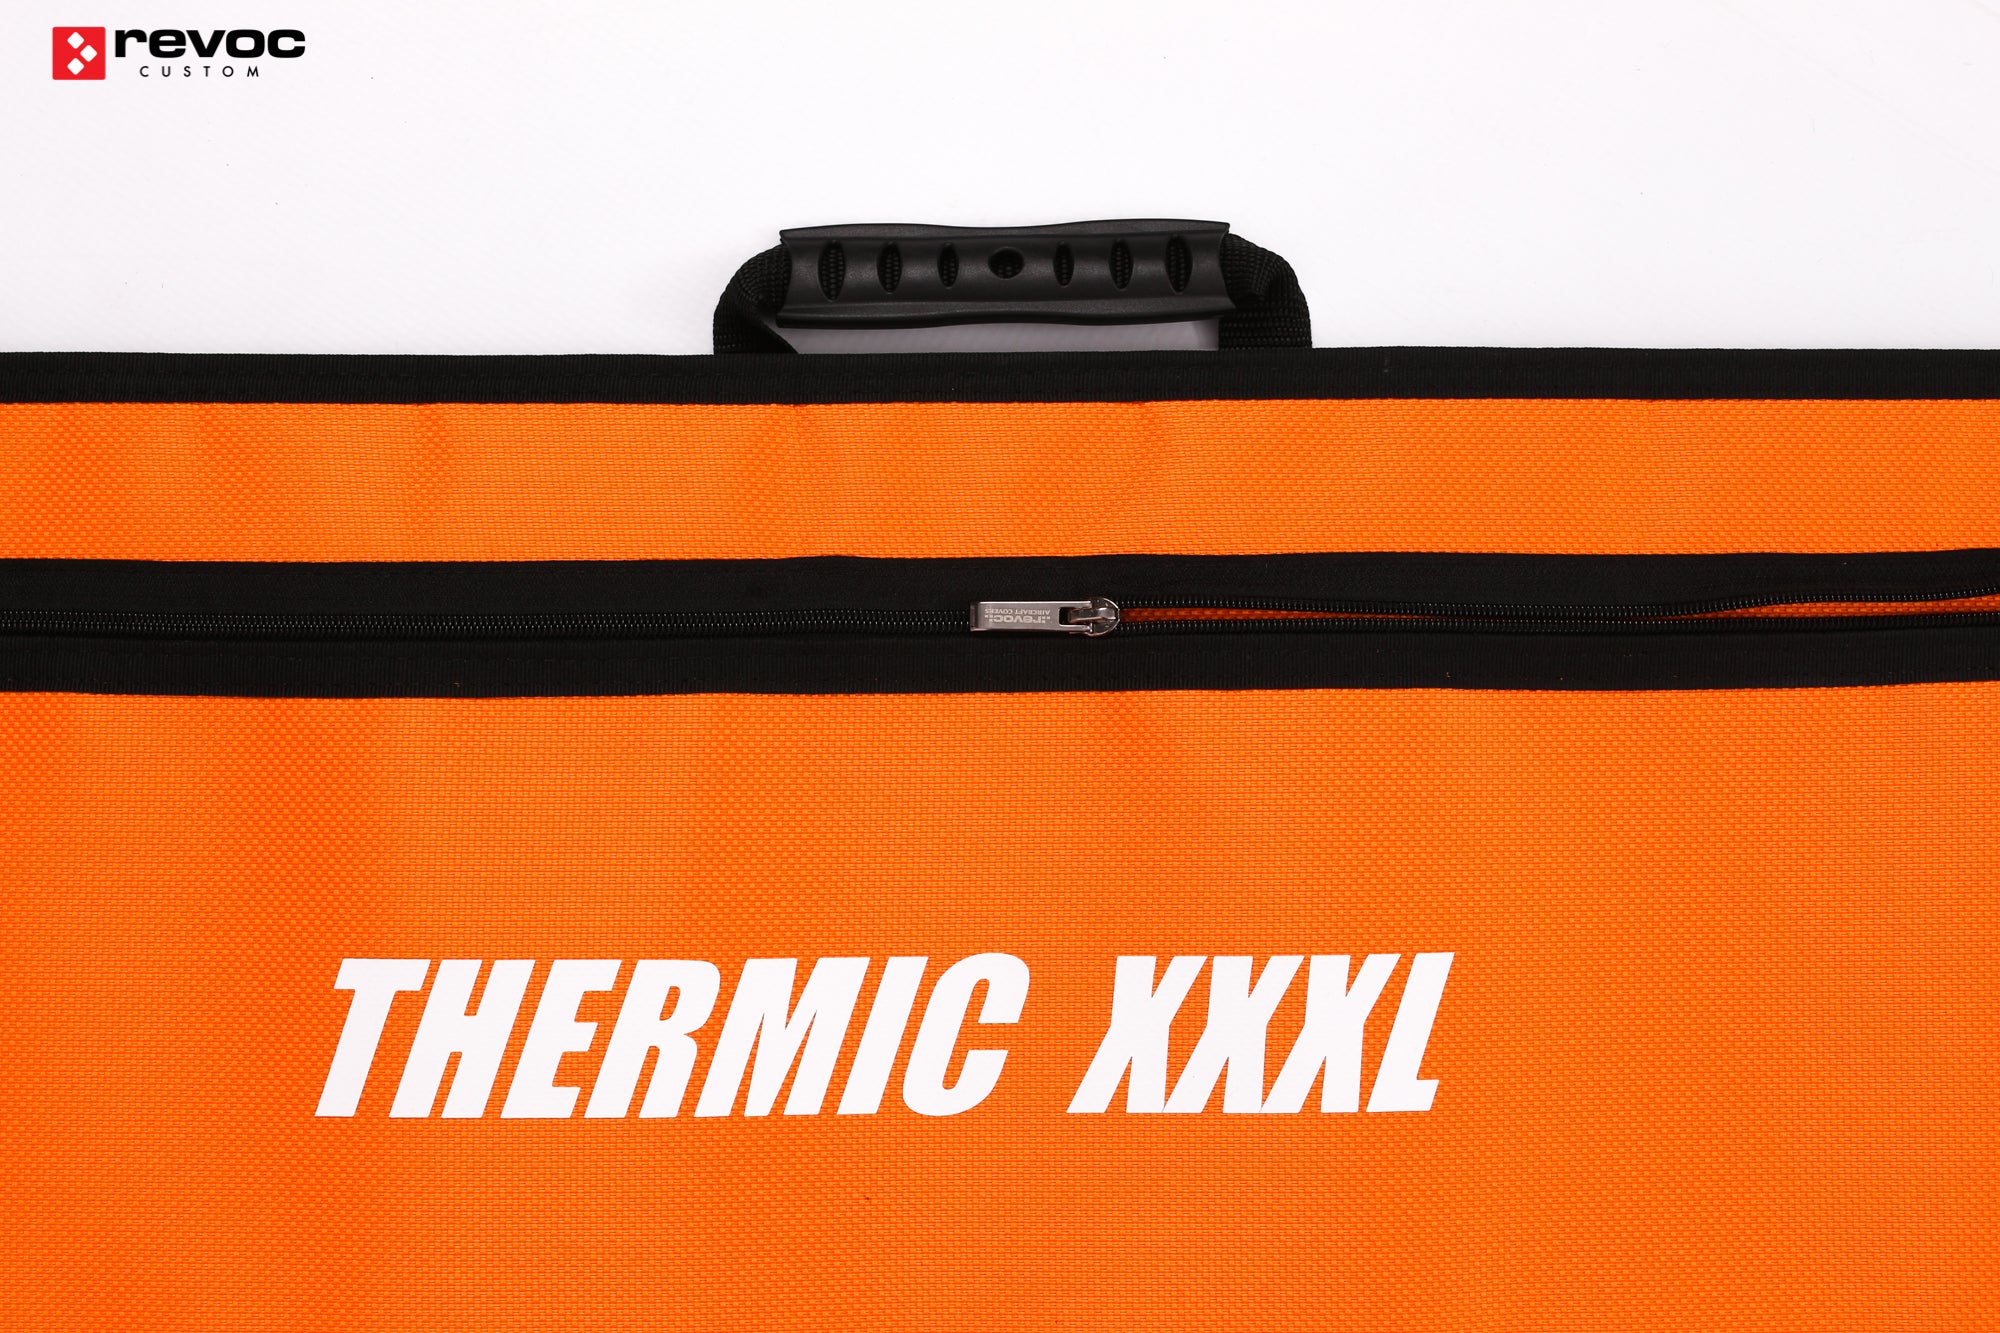 Revoc Model Material Bag Set for  Valenta Model Glider - Thermic XXXL